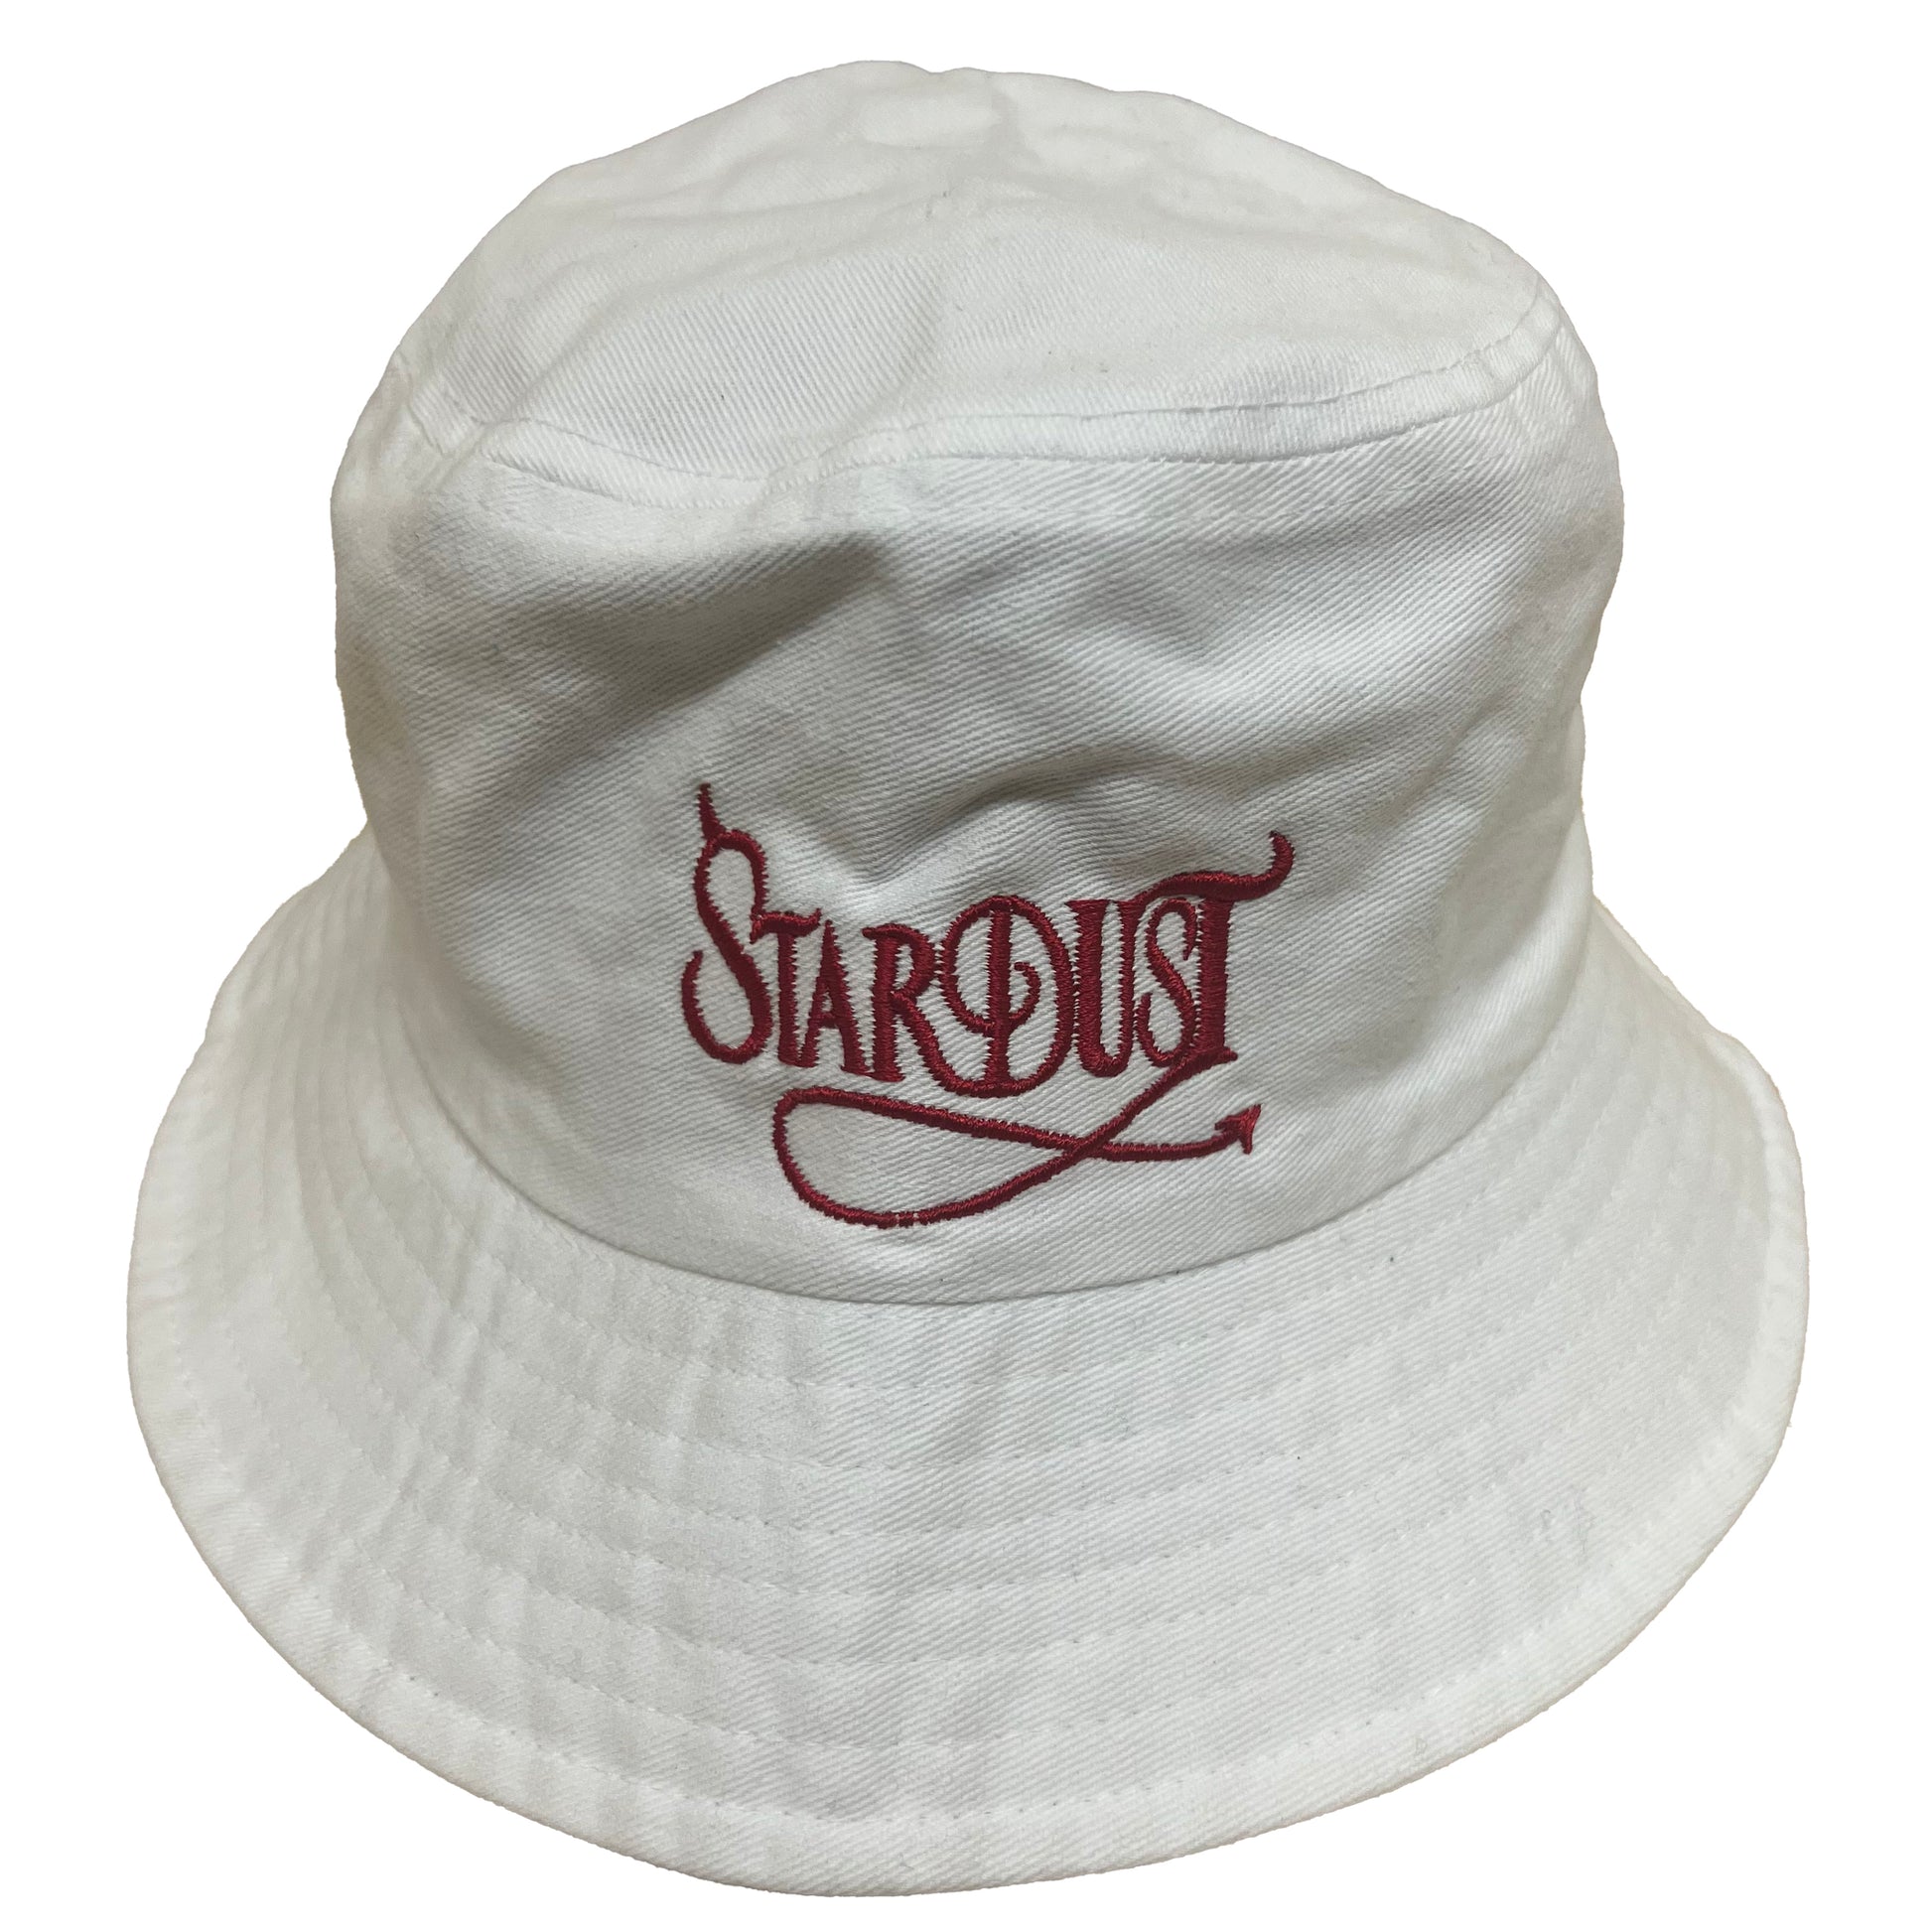 Stardust Devil's Wanderlust Bucket Hat 001 Stone Washed White / Red